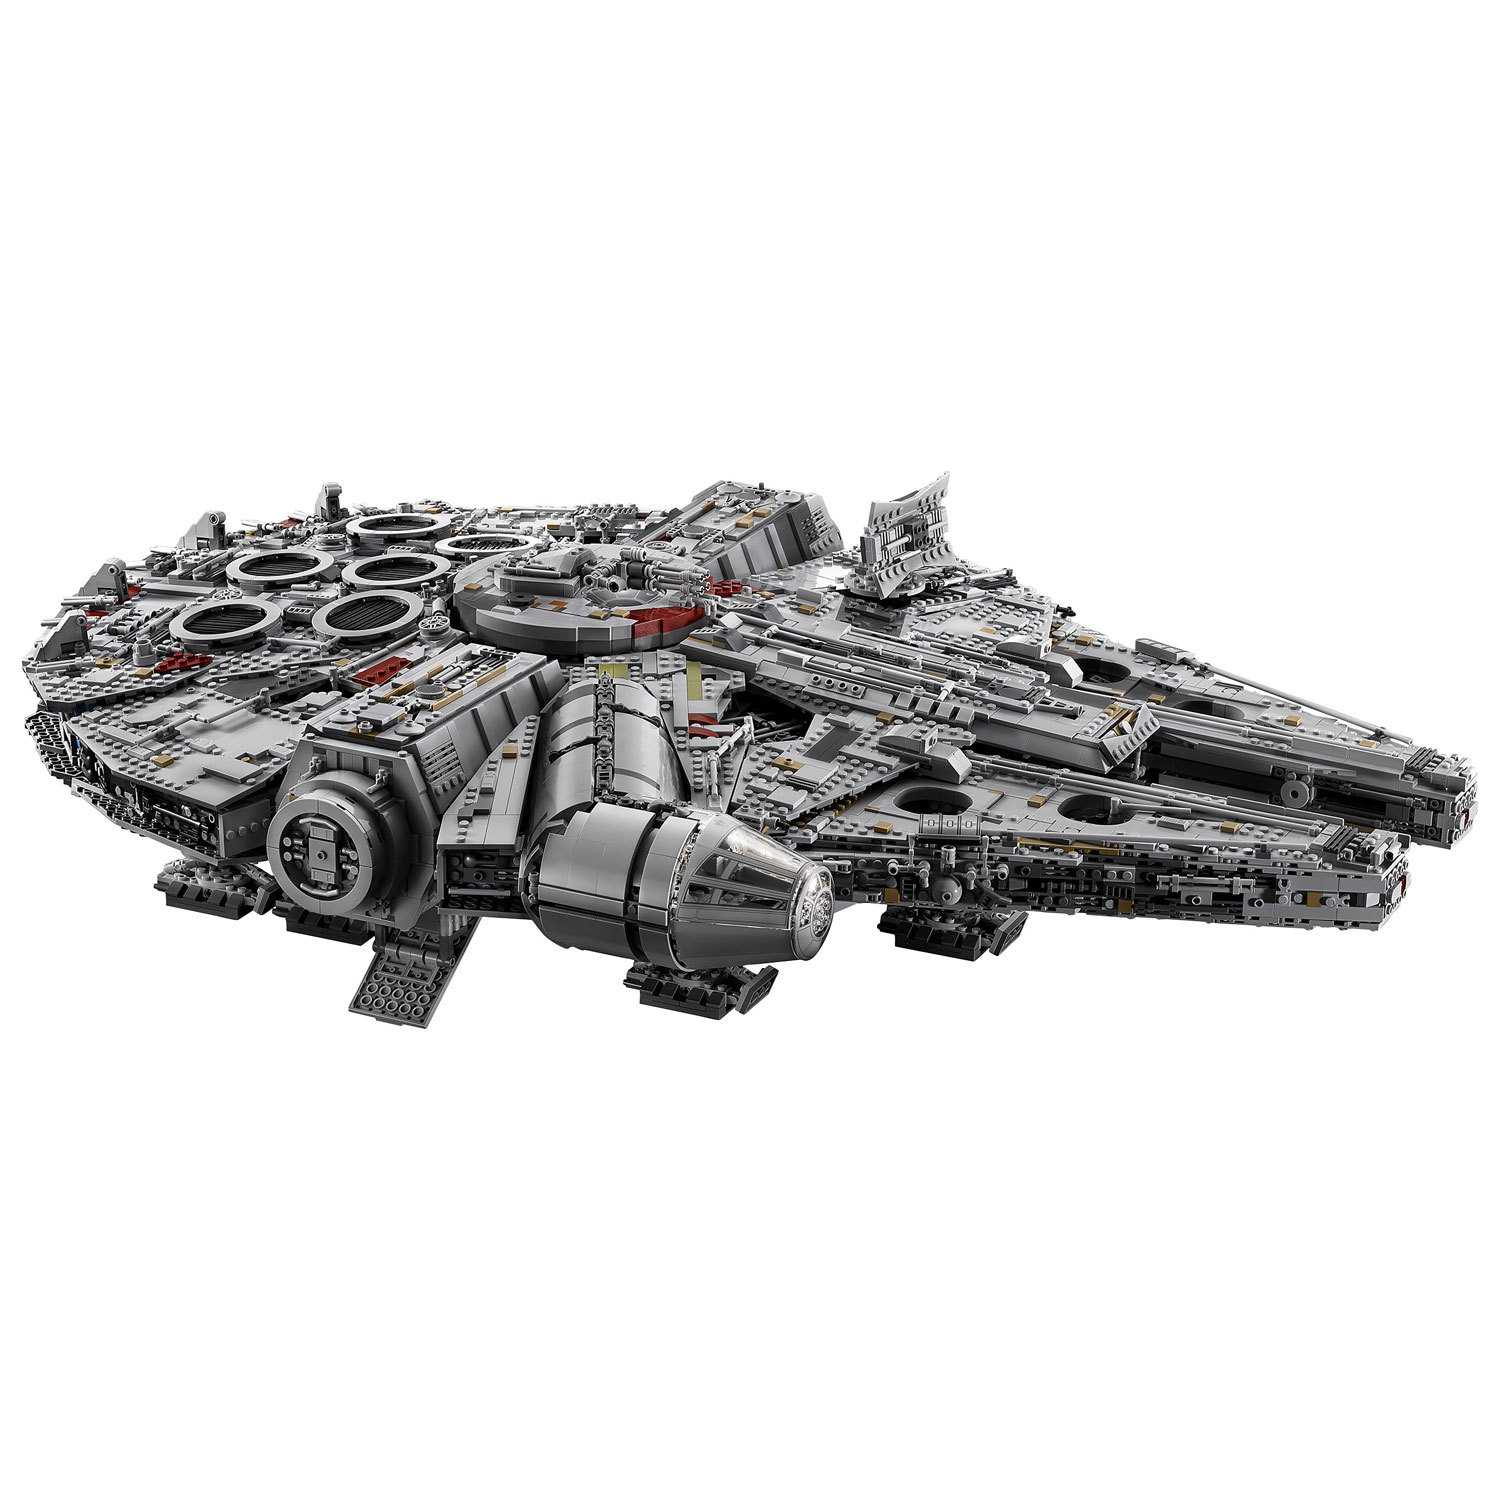 LEGO Star Wars: Millennium Falcon (Hard to Find) - 7541 Pieces